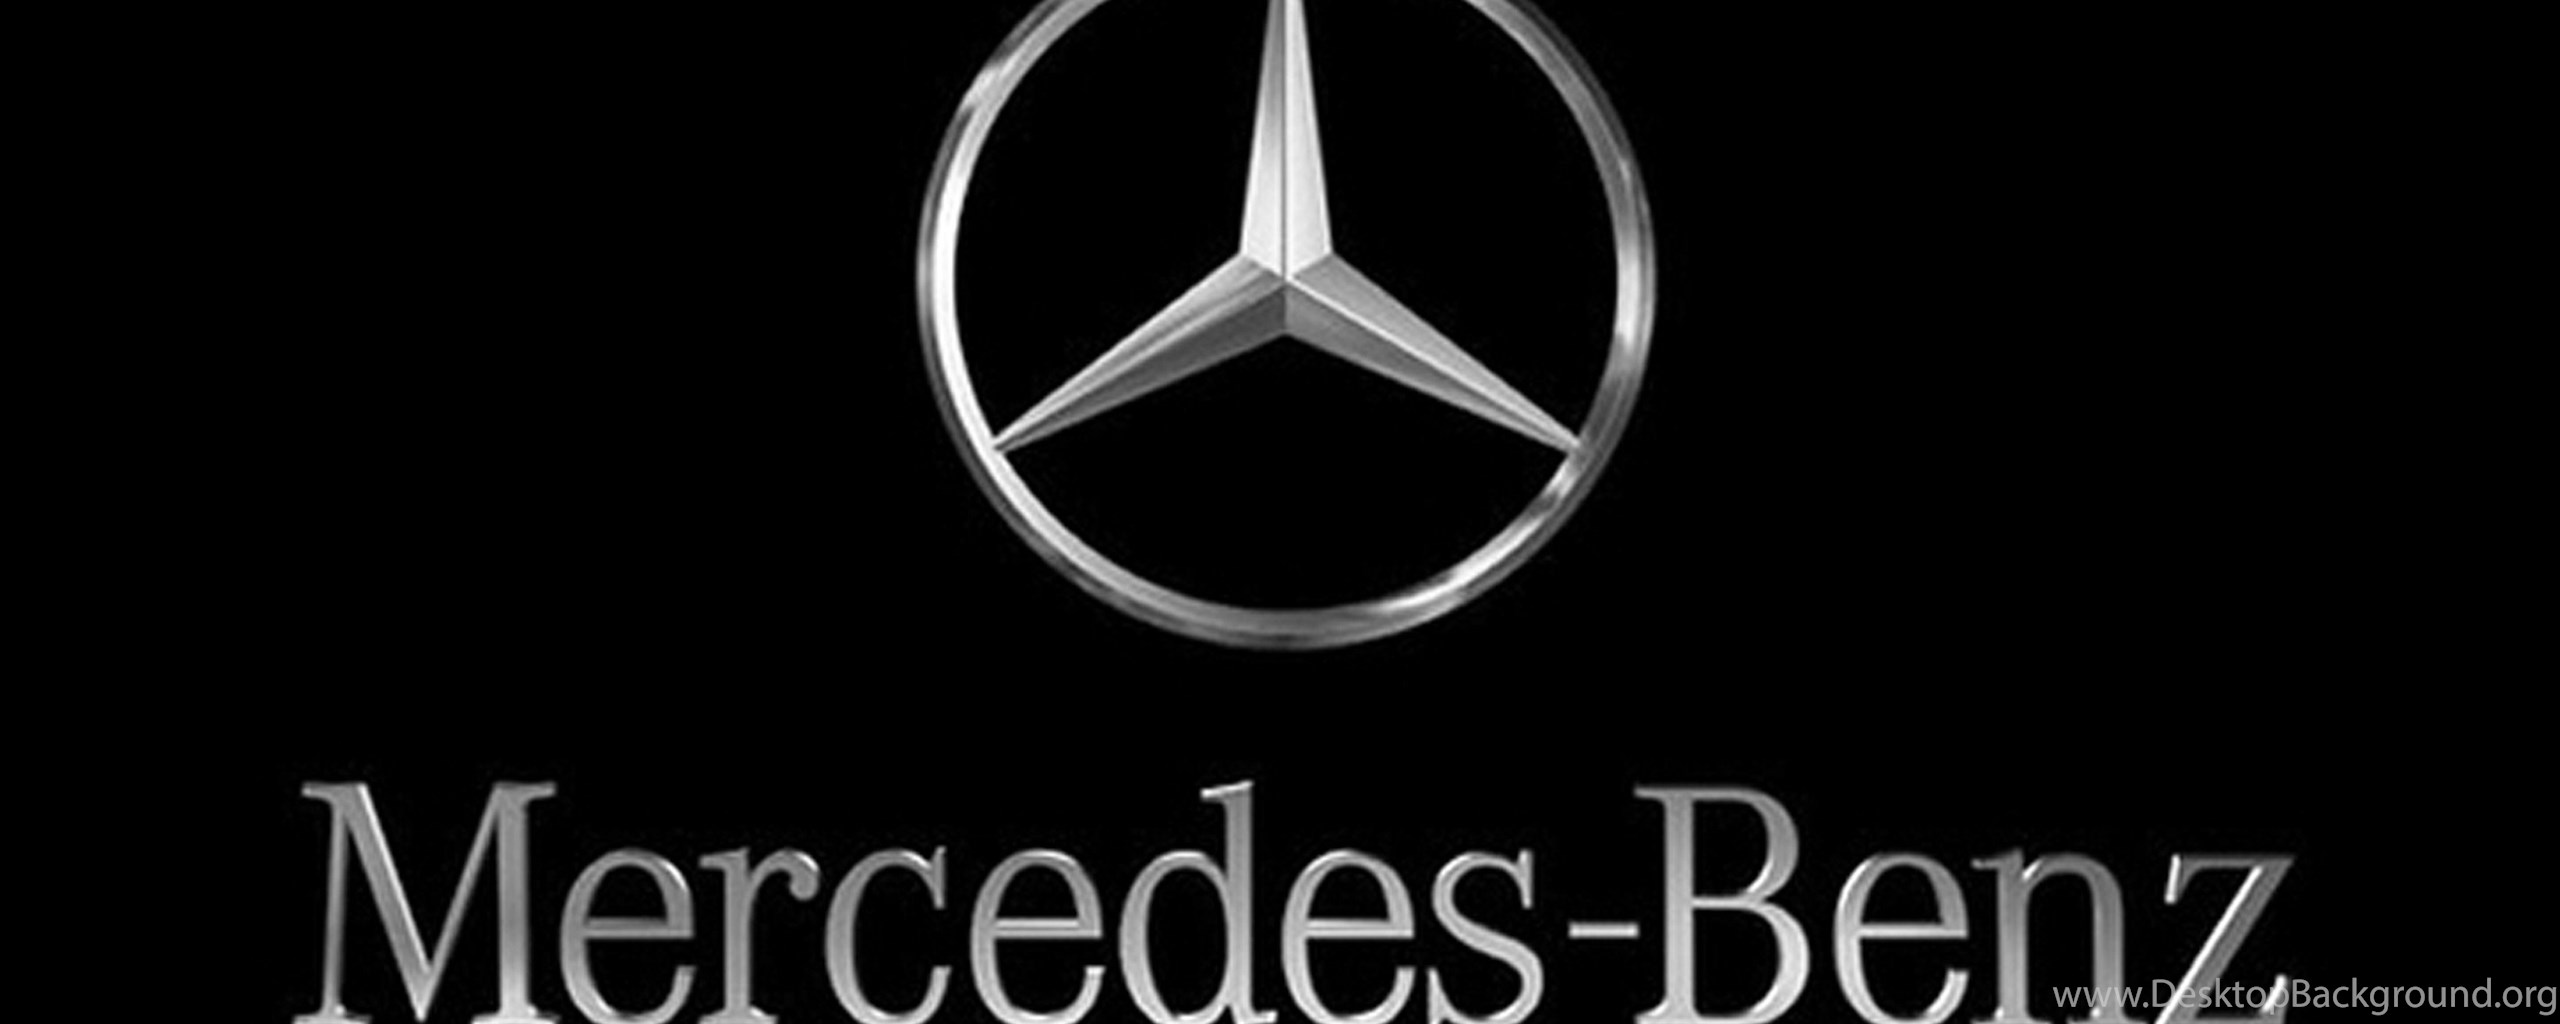 Mercedes текст. Мерседес- Бенц/ Mercedes-Benz лого. Логотип Mercedes-Benz. Значок Мерседес. Mercedes Benz надпись.